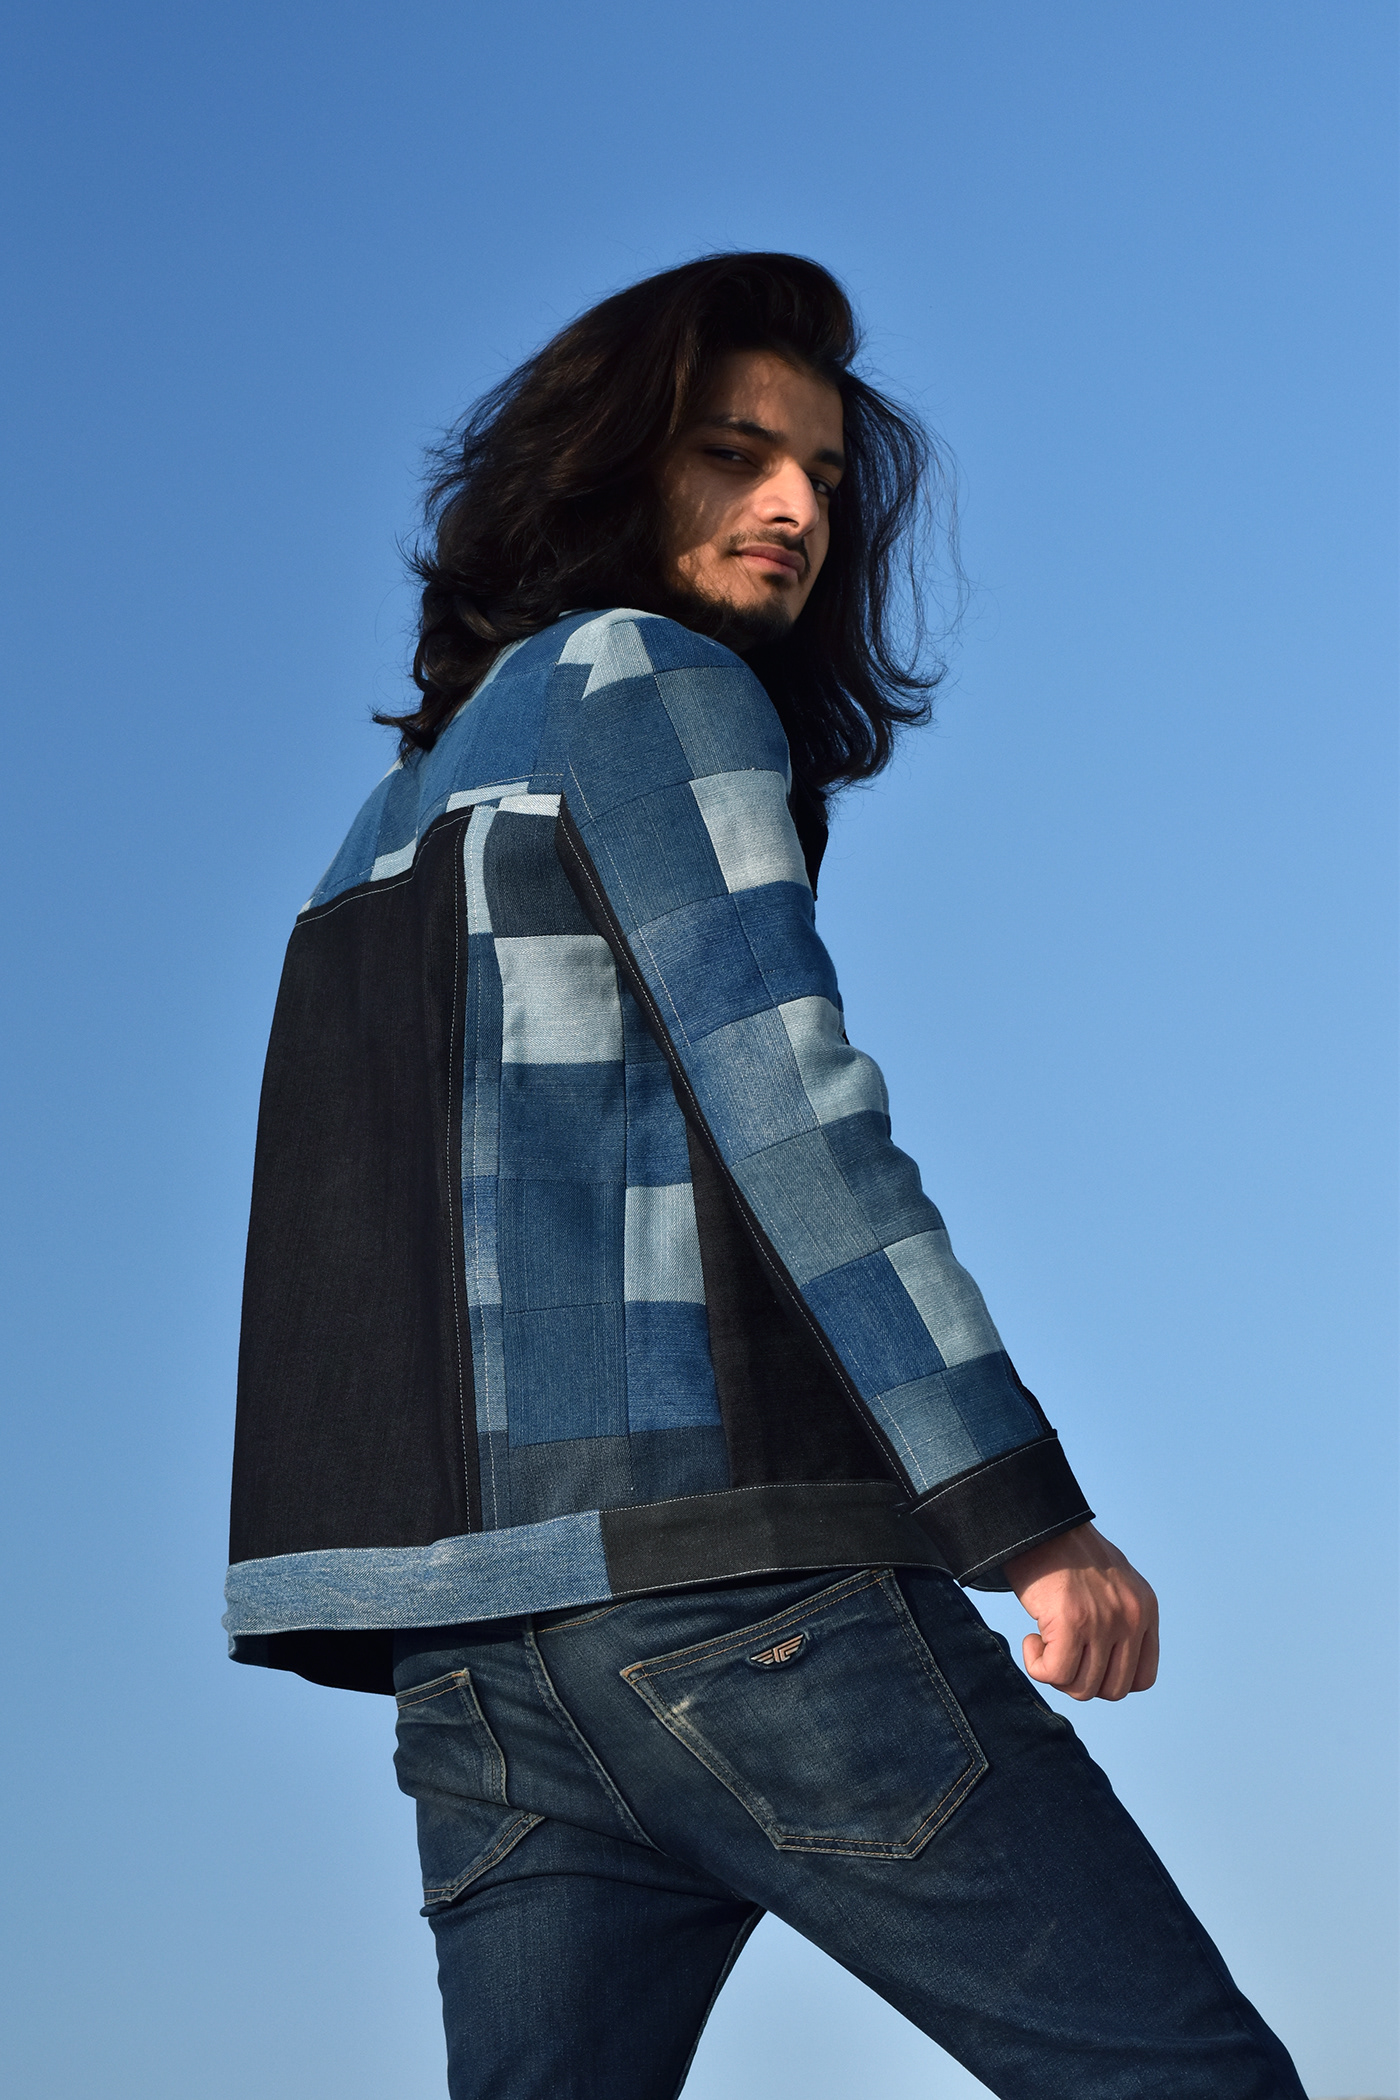 Apparel Design Denim Fashion  garment jacket textile upcycling